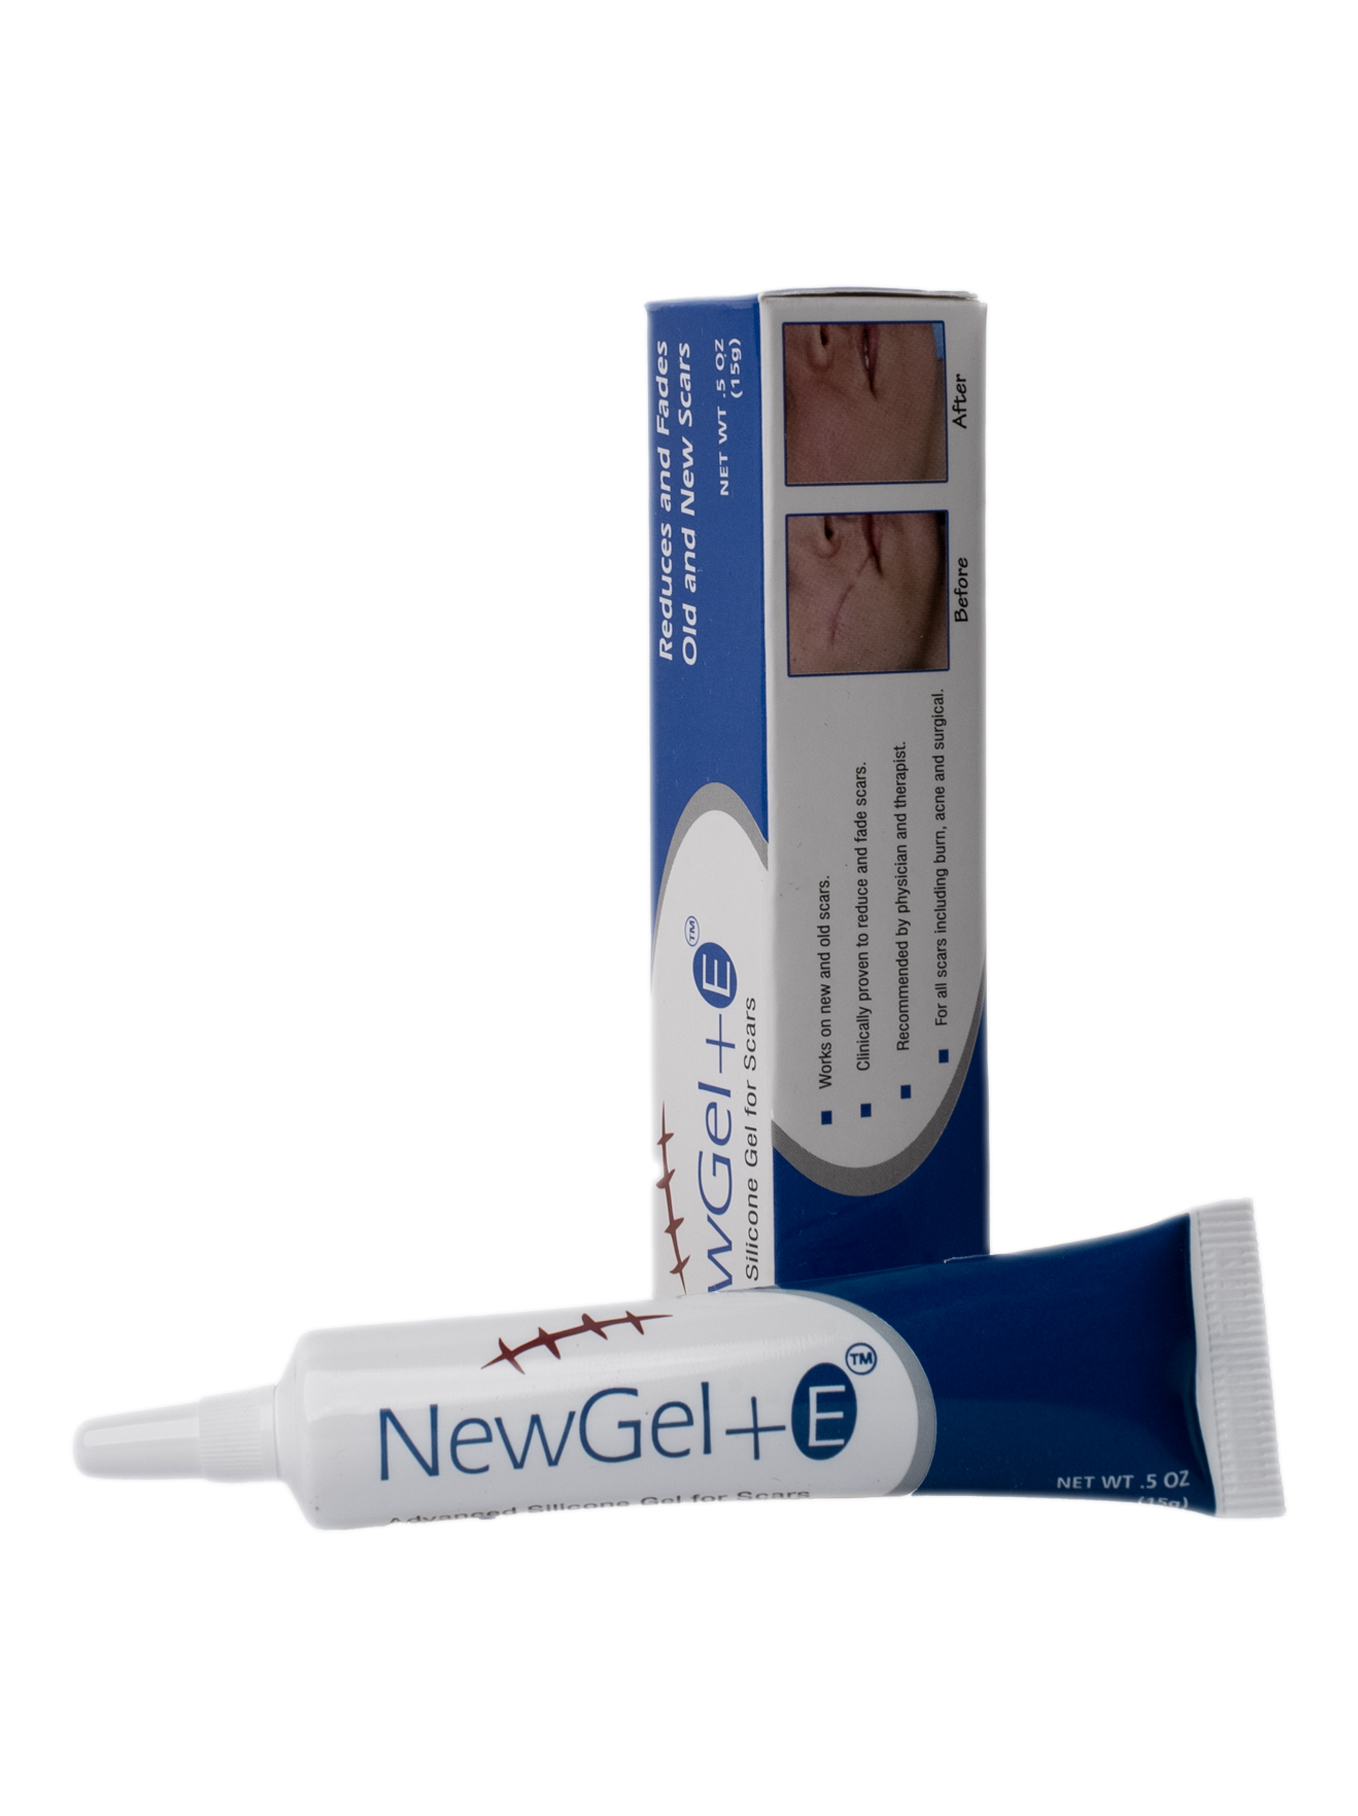 NewGel+ E Silicone Gel with Vitamin E (Multiple Sizes Available) |  DermWarehouse